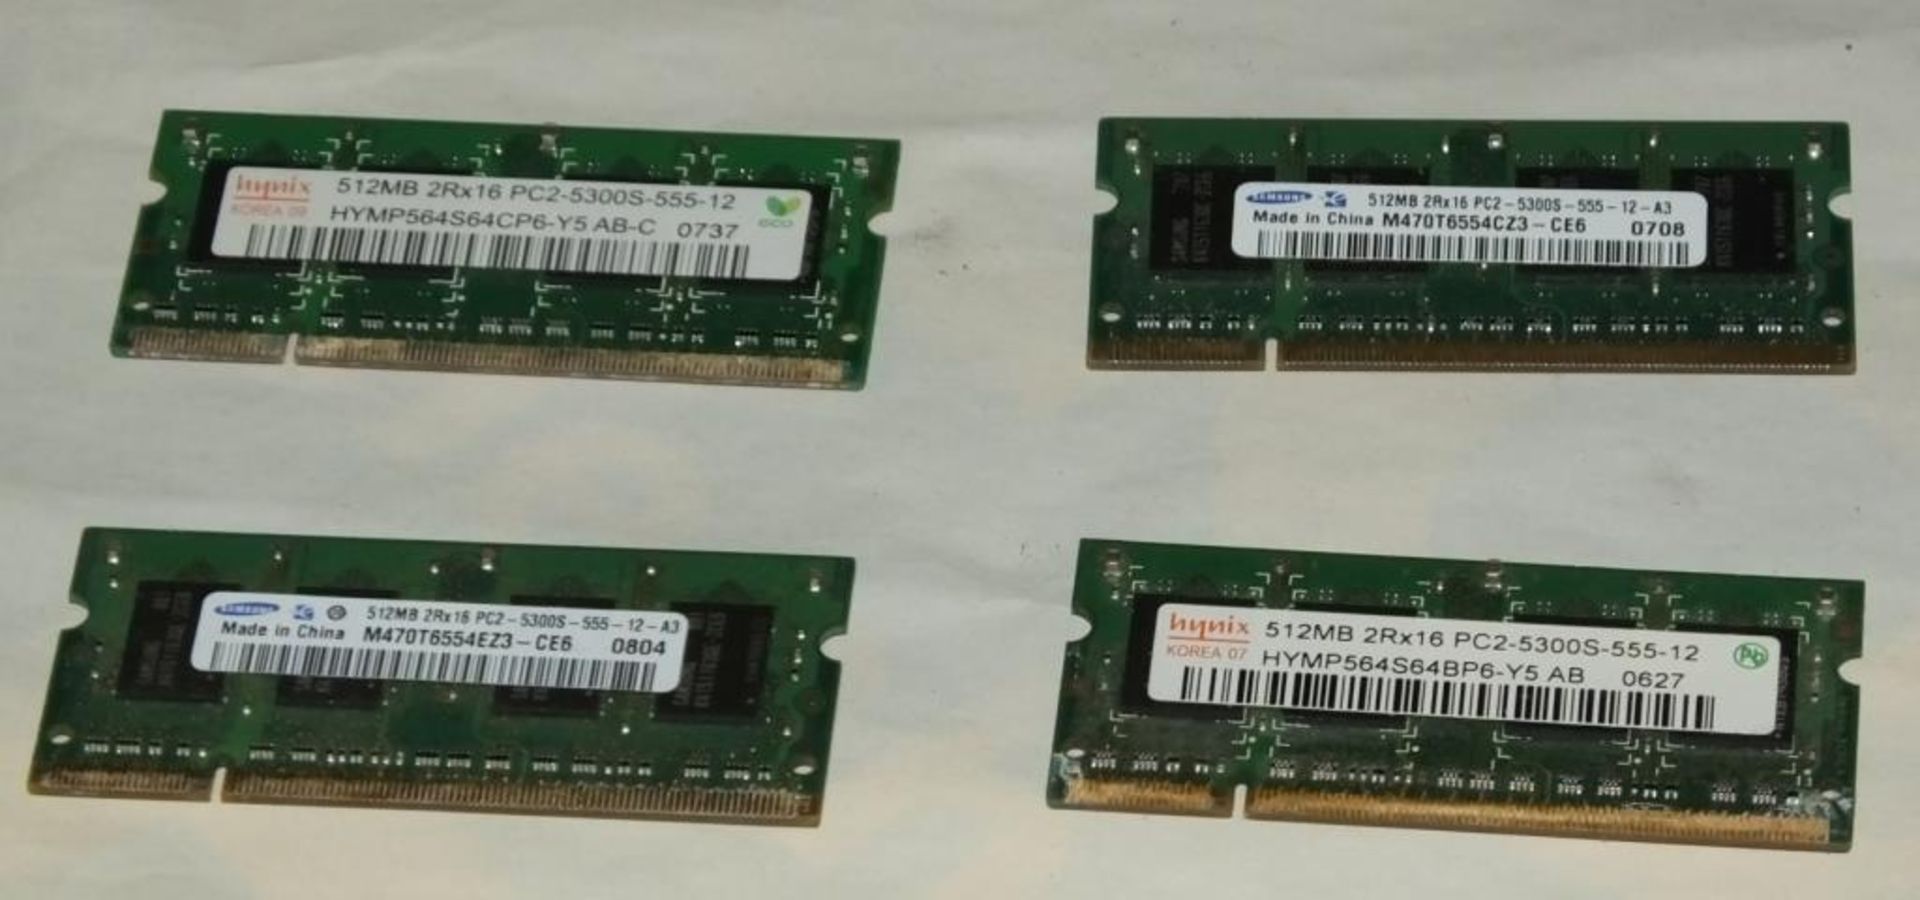 10x 512MB Memory Sticks. - Image 2 of 2